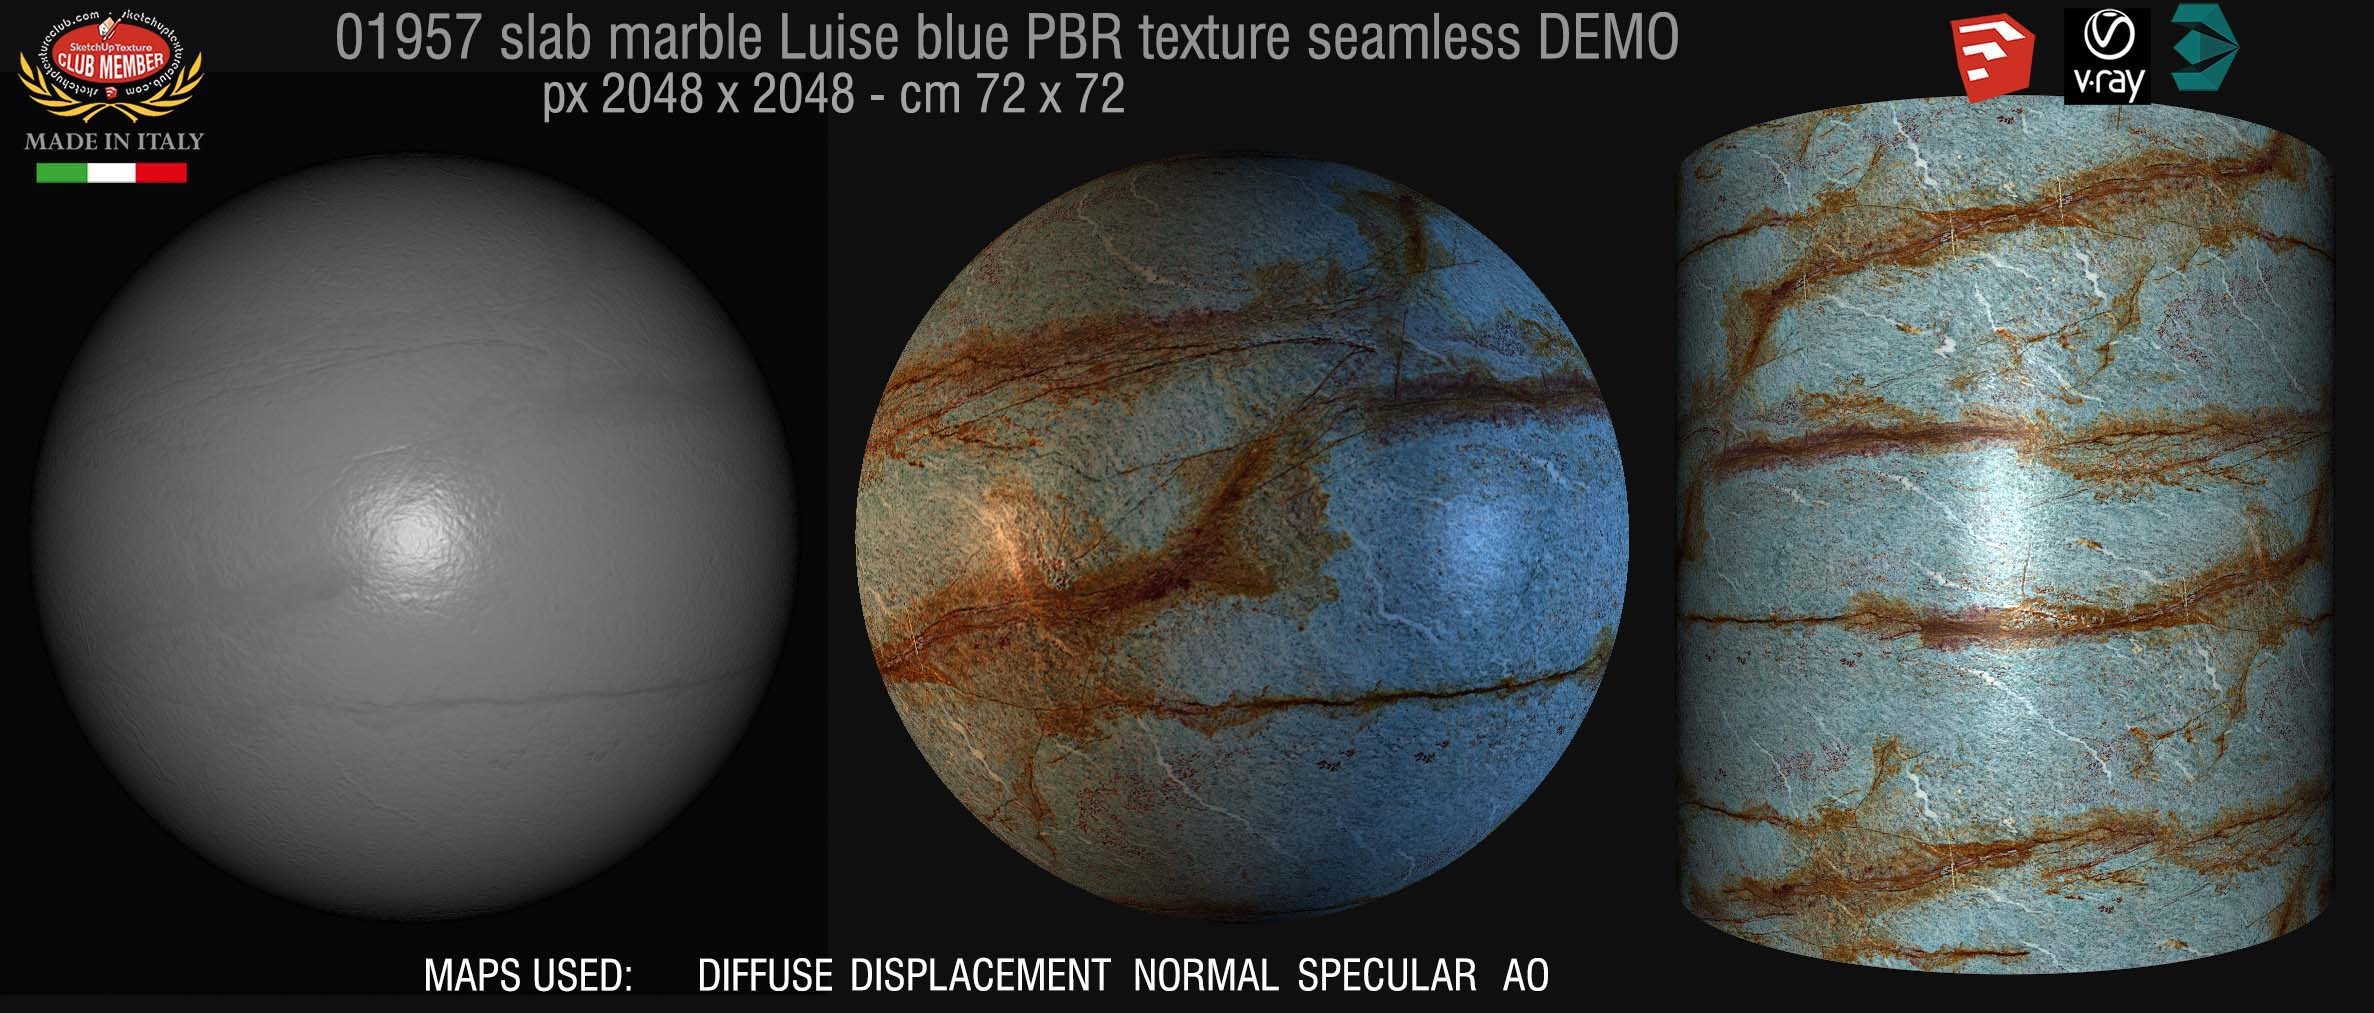 01957 slab marble luise blue PBR texture seamless DEMO